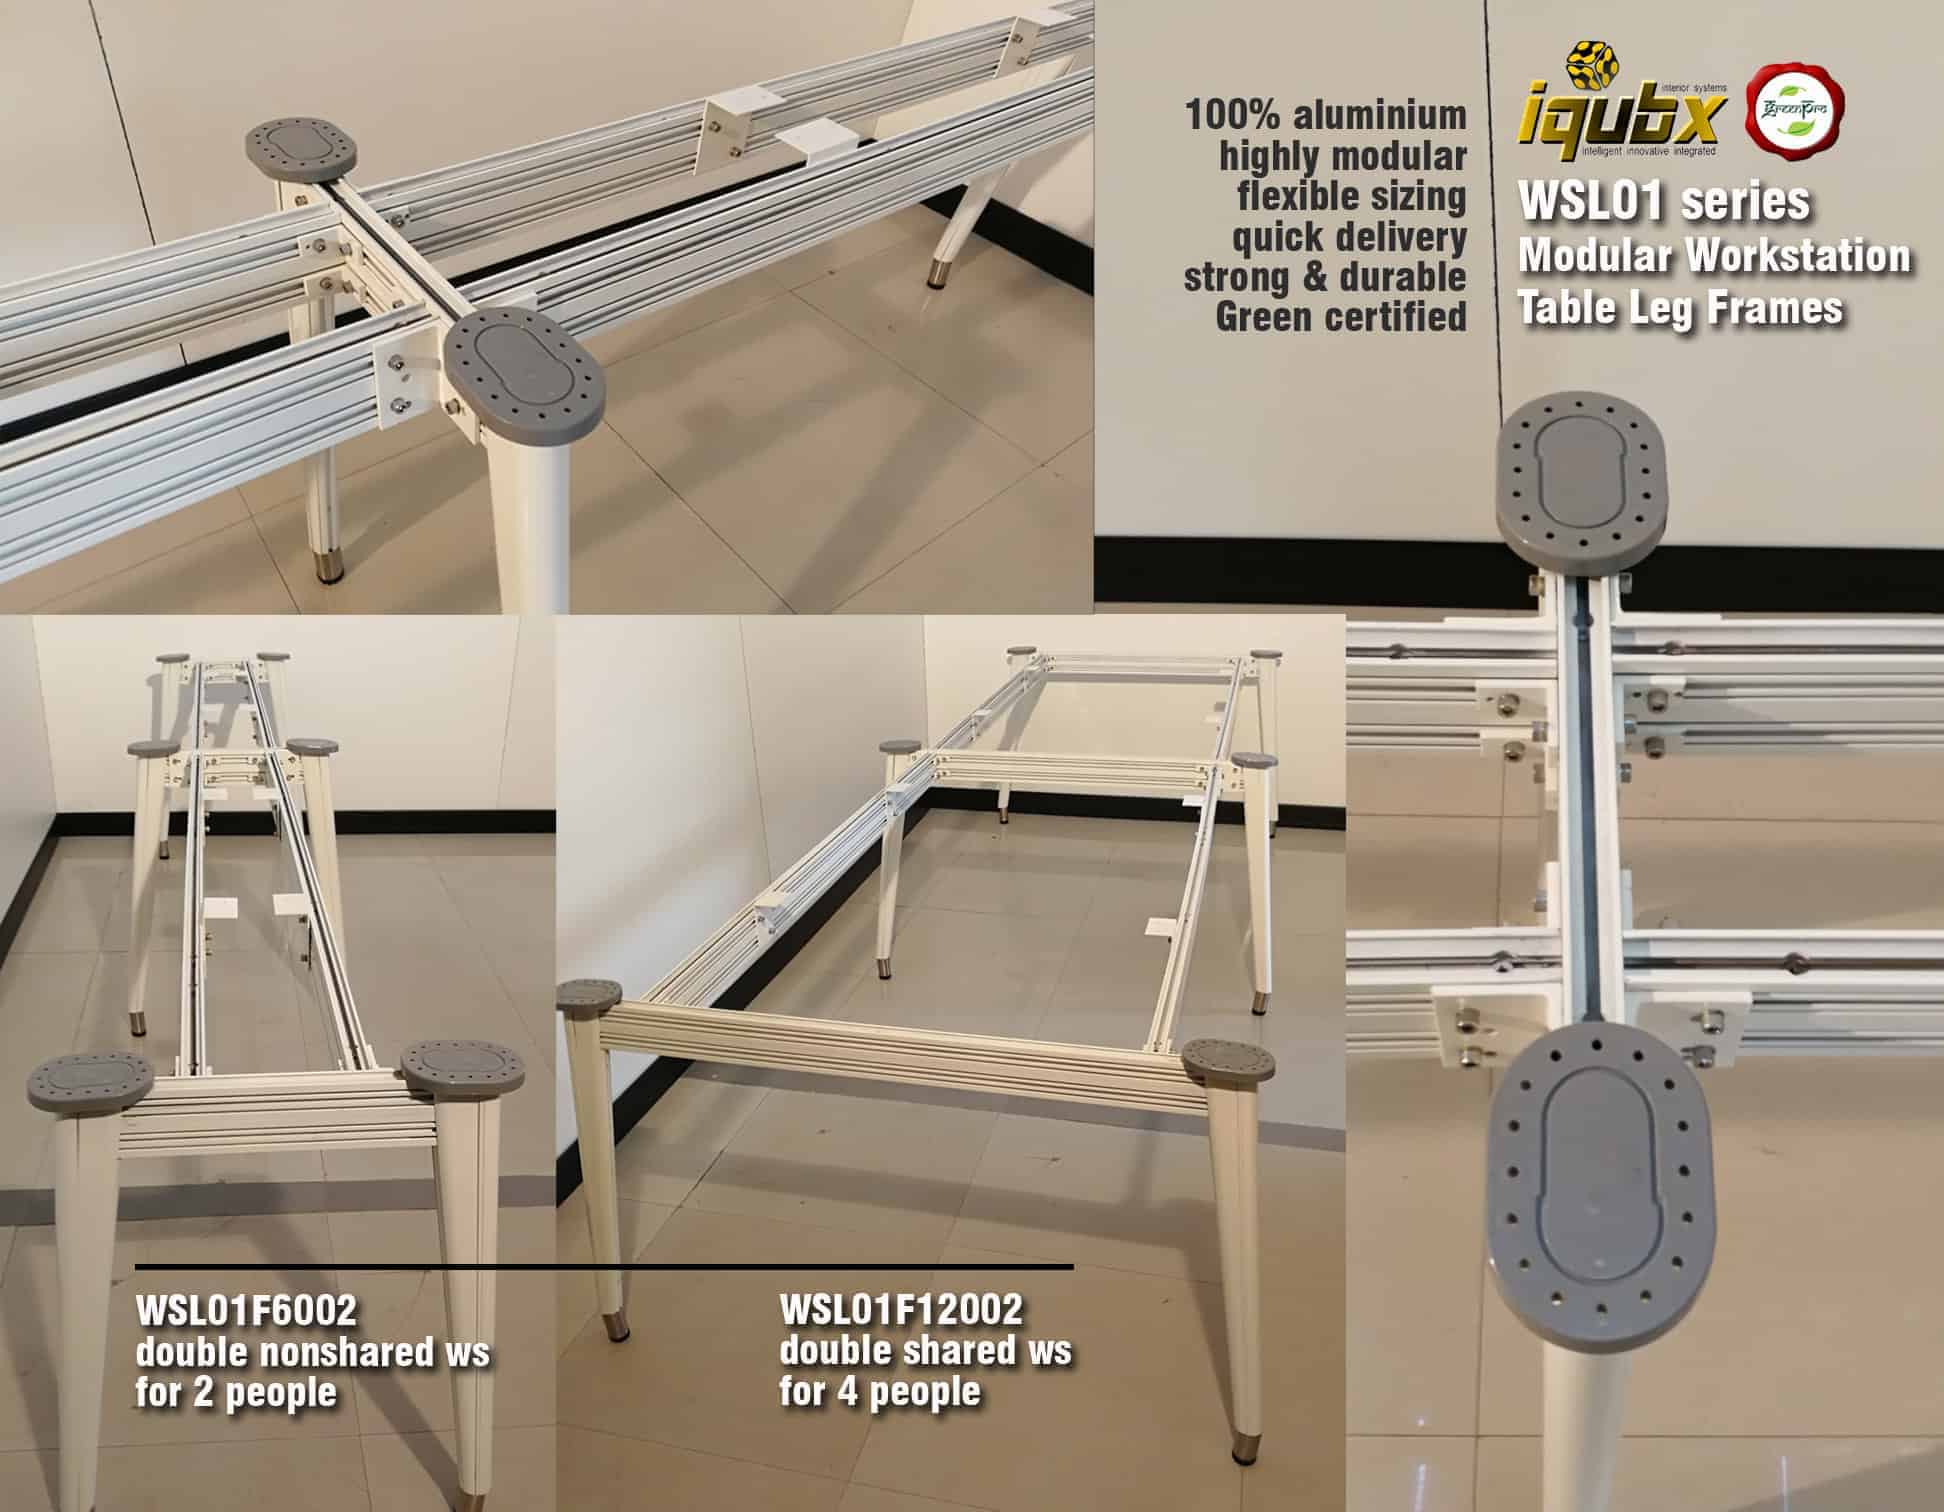 Iqubx modular workstation table leg and leg frames